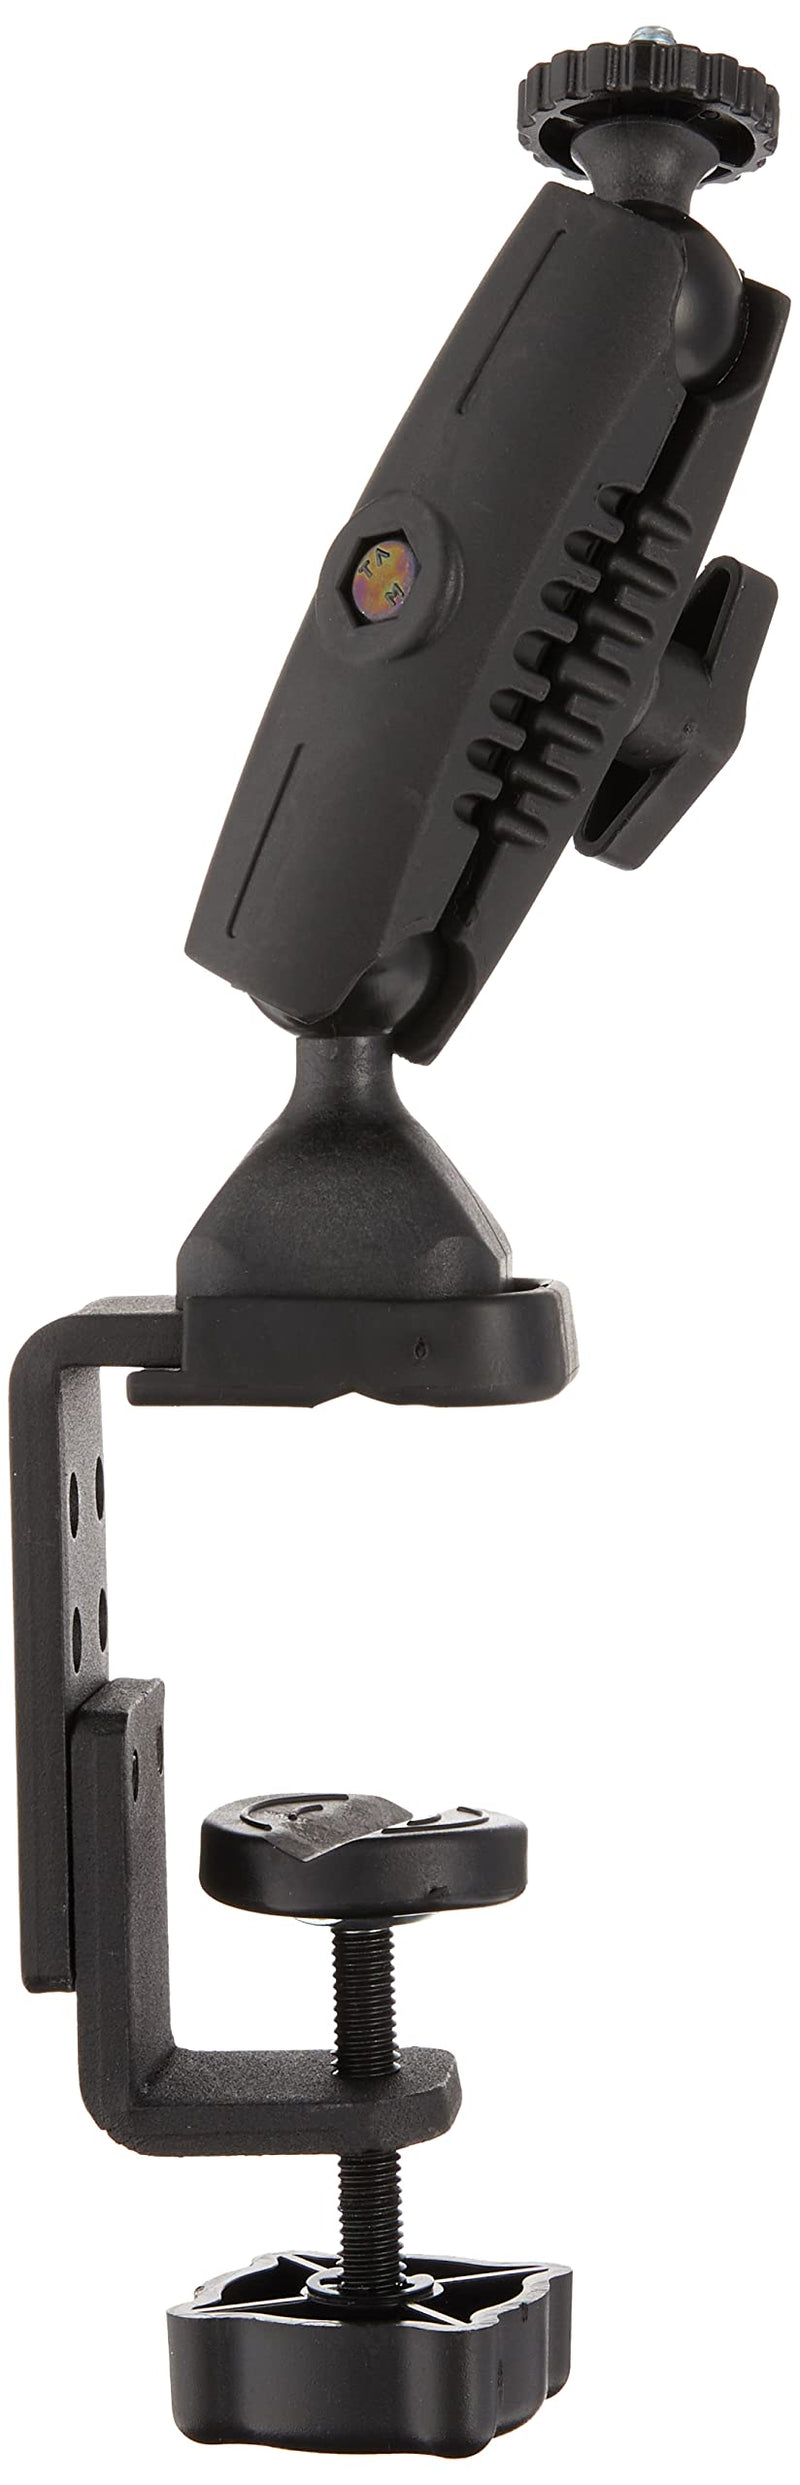 ARKON Heavy Duty Camera Clamp Mount with 1/4 20 Mounting Bolt for Nikon Sony Canon Olympus Panasonic Cameras